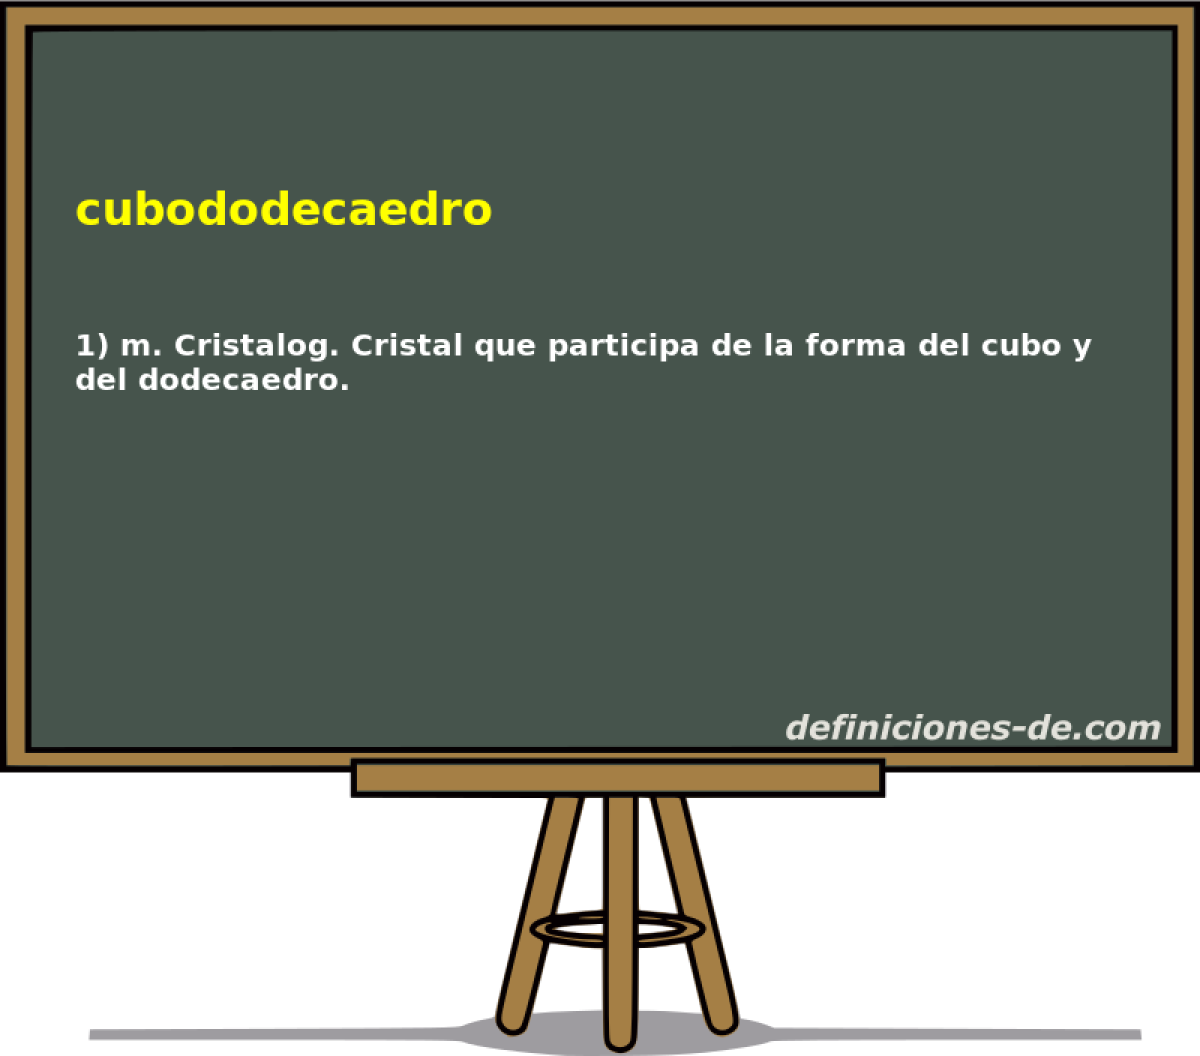 cubododecaedro 